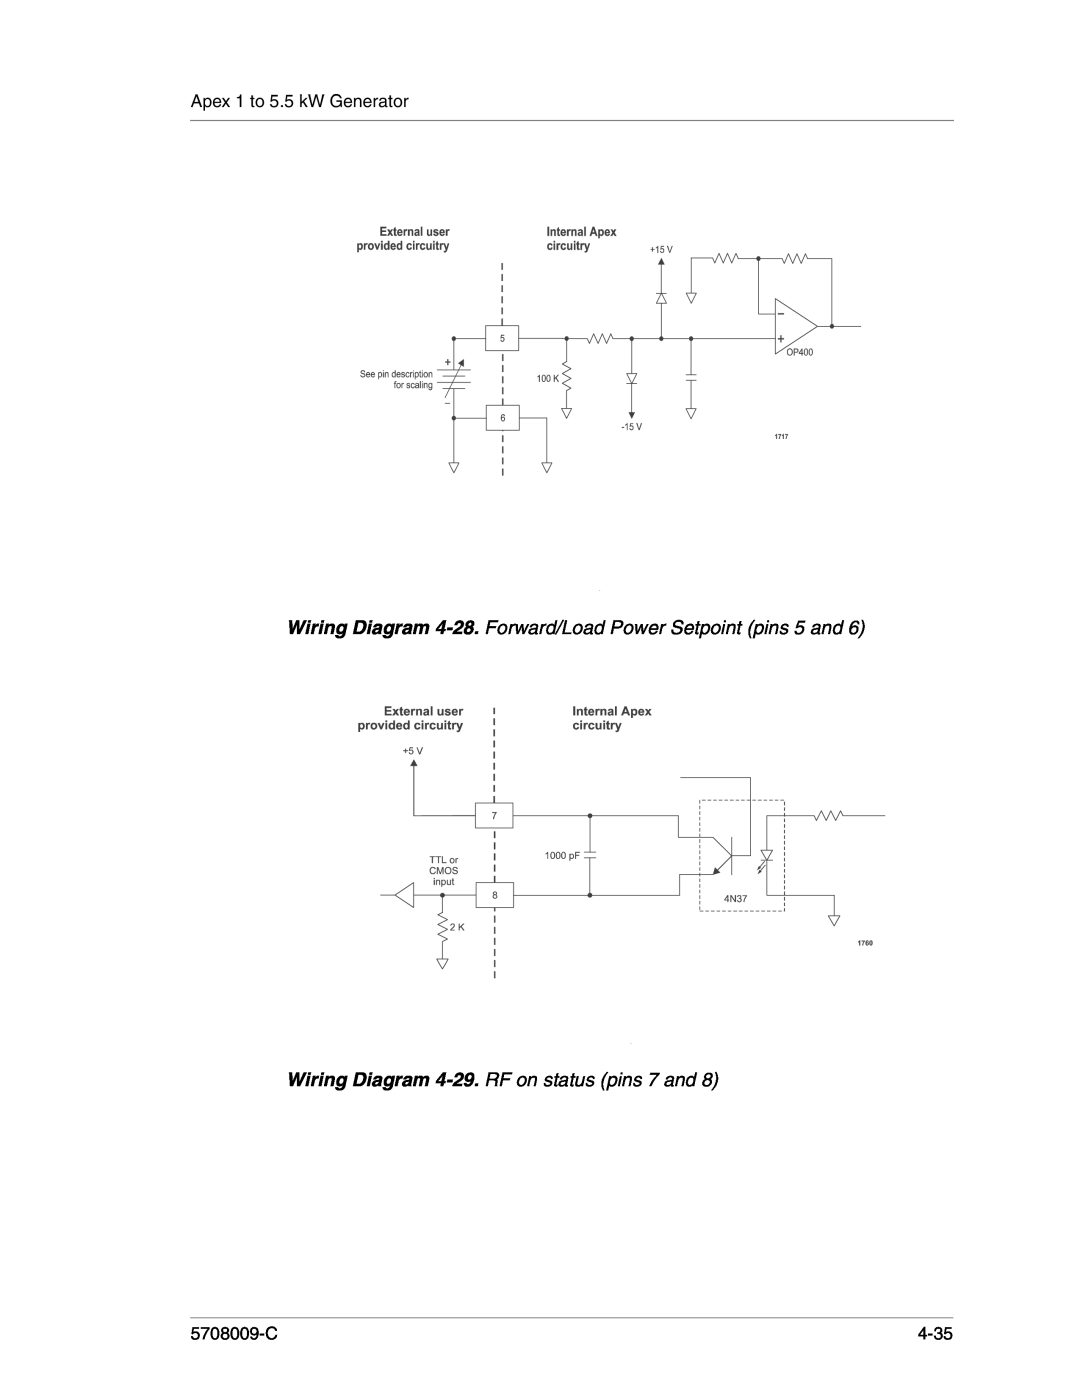 Apex Digital 5708009-C manual Wiring Diagram 4-28. Forward/Load Power Setpoint pins 5 and, Apex 1 to 5.5 kW Generator, 4-35 